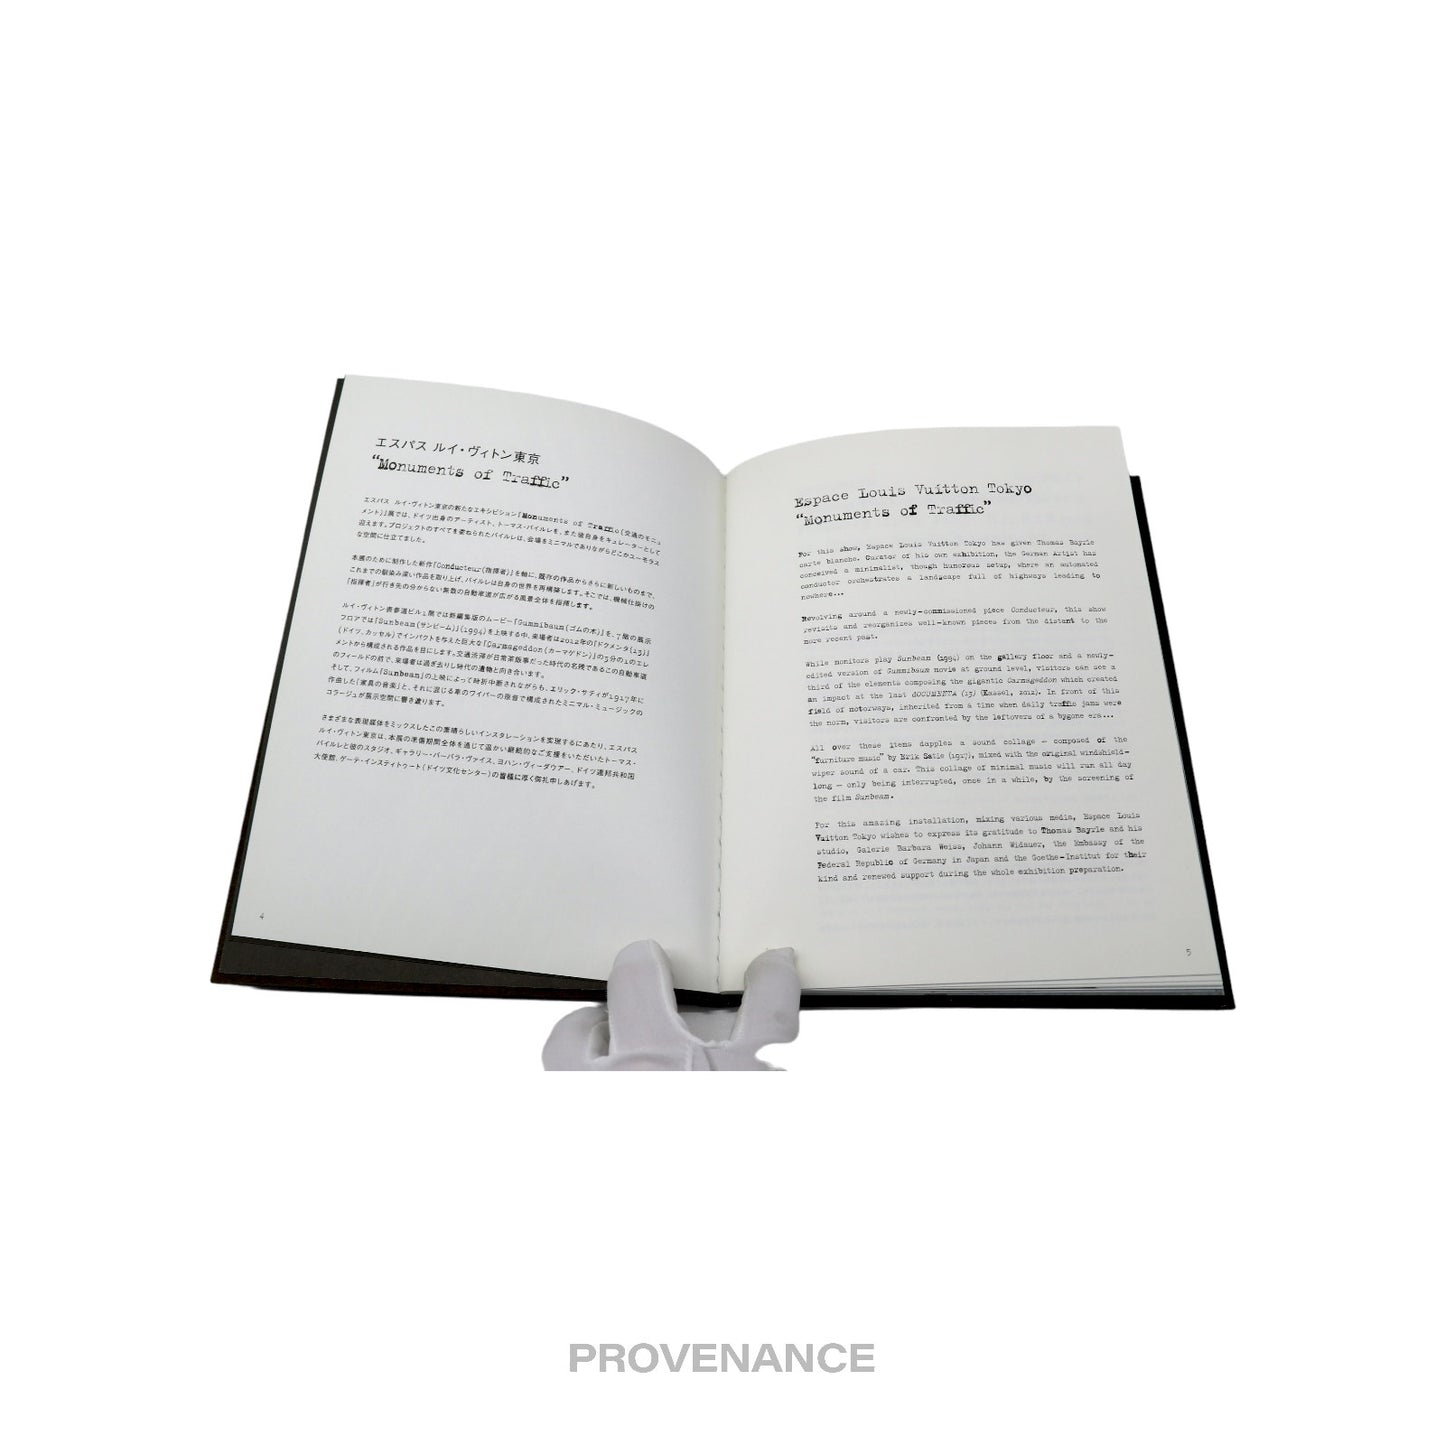 🔴 Louis Vuitton Espace Art Book - Monuments of Traffic